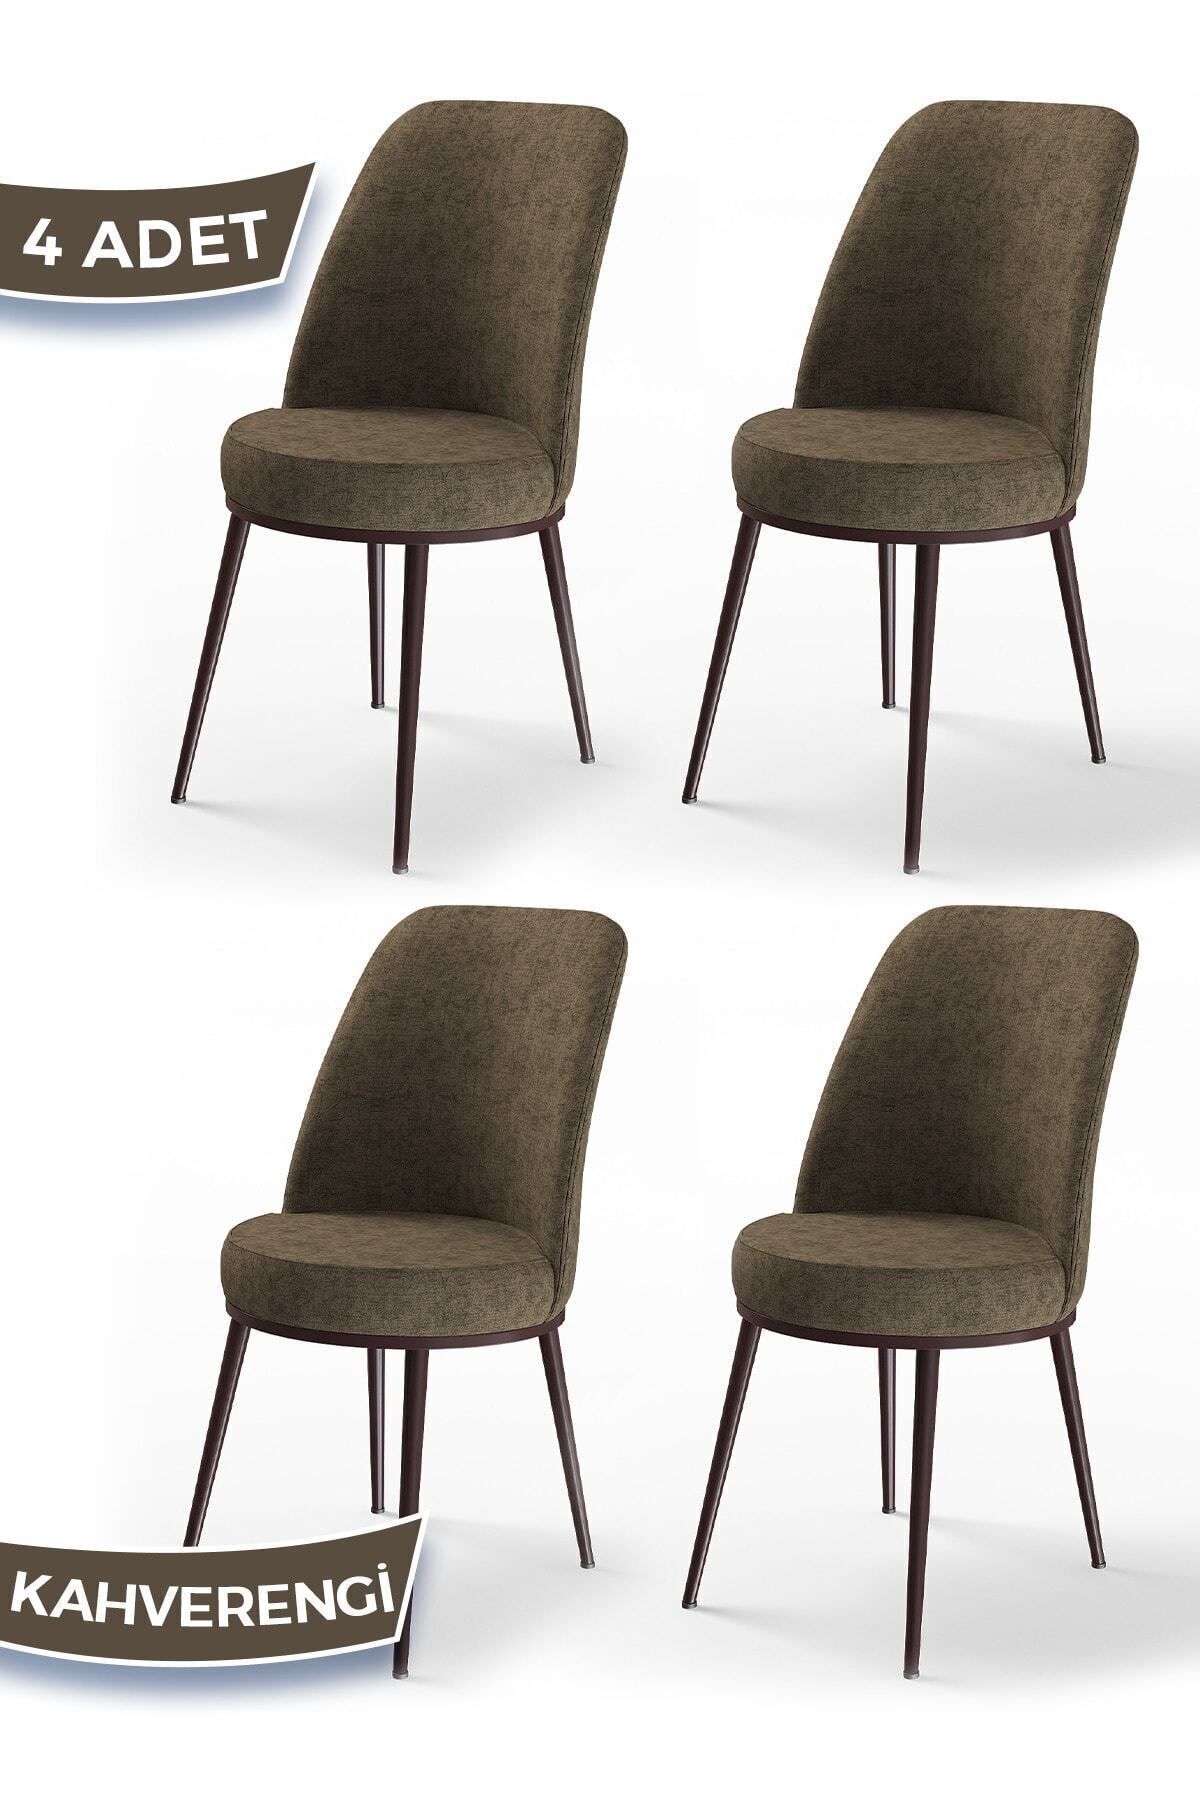 Canisa Concept Dexa Serisi Kahverengi Renk 4 Adet Sandalye, Renk Kahverengi, Ayaklar Kahverengi